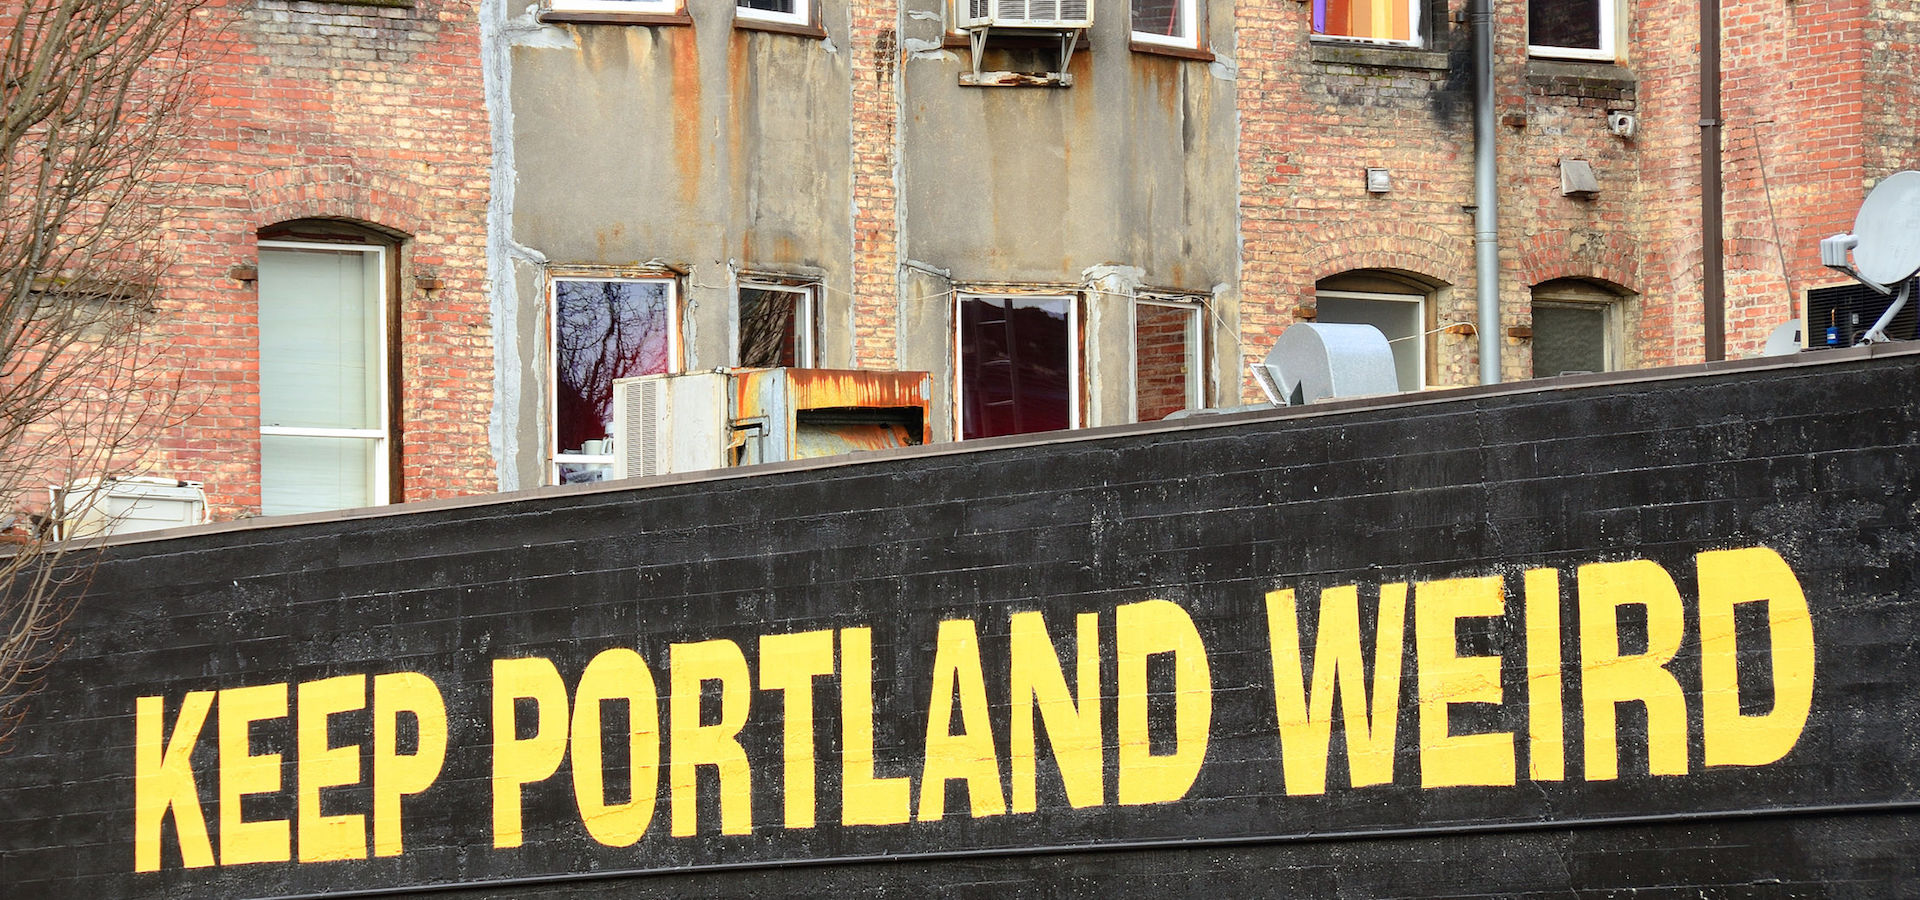 Keep Portland weird sign in downtown Oregon